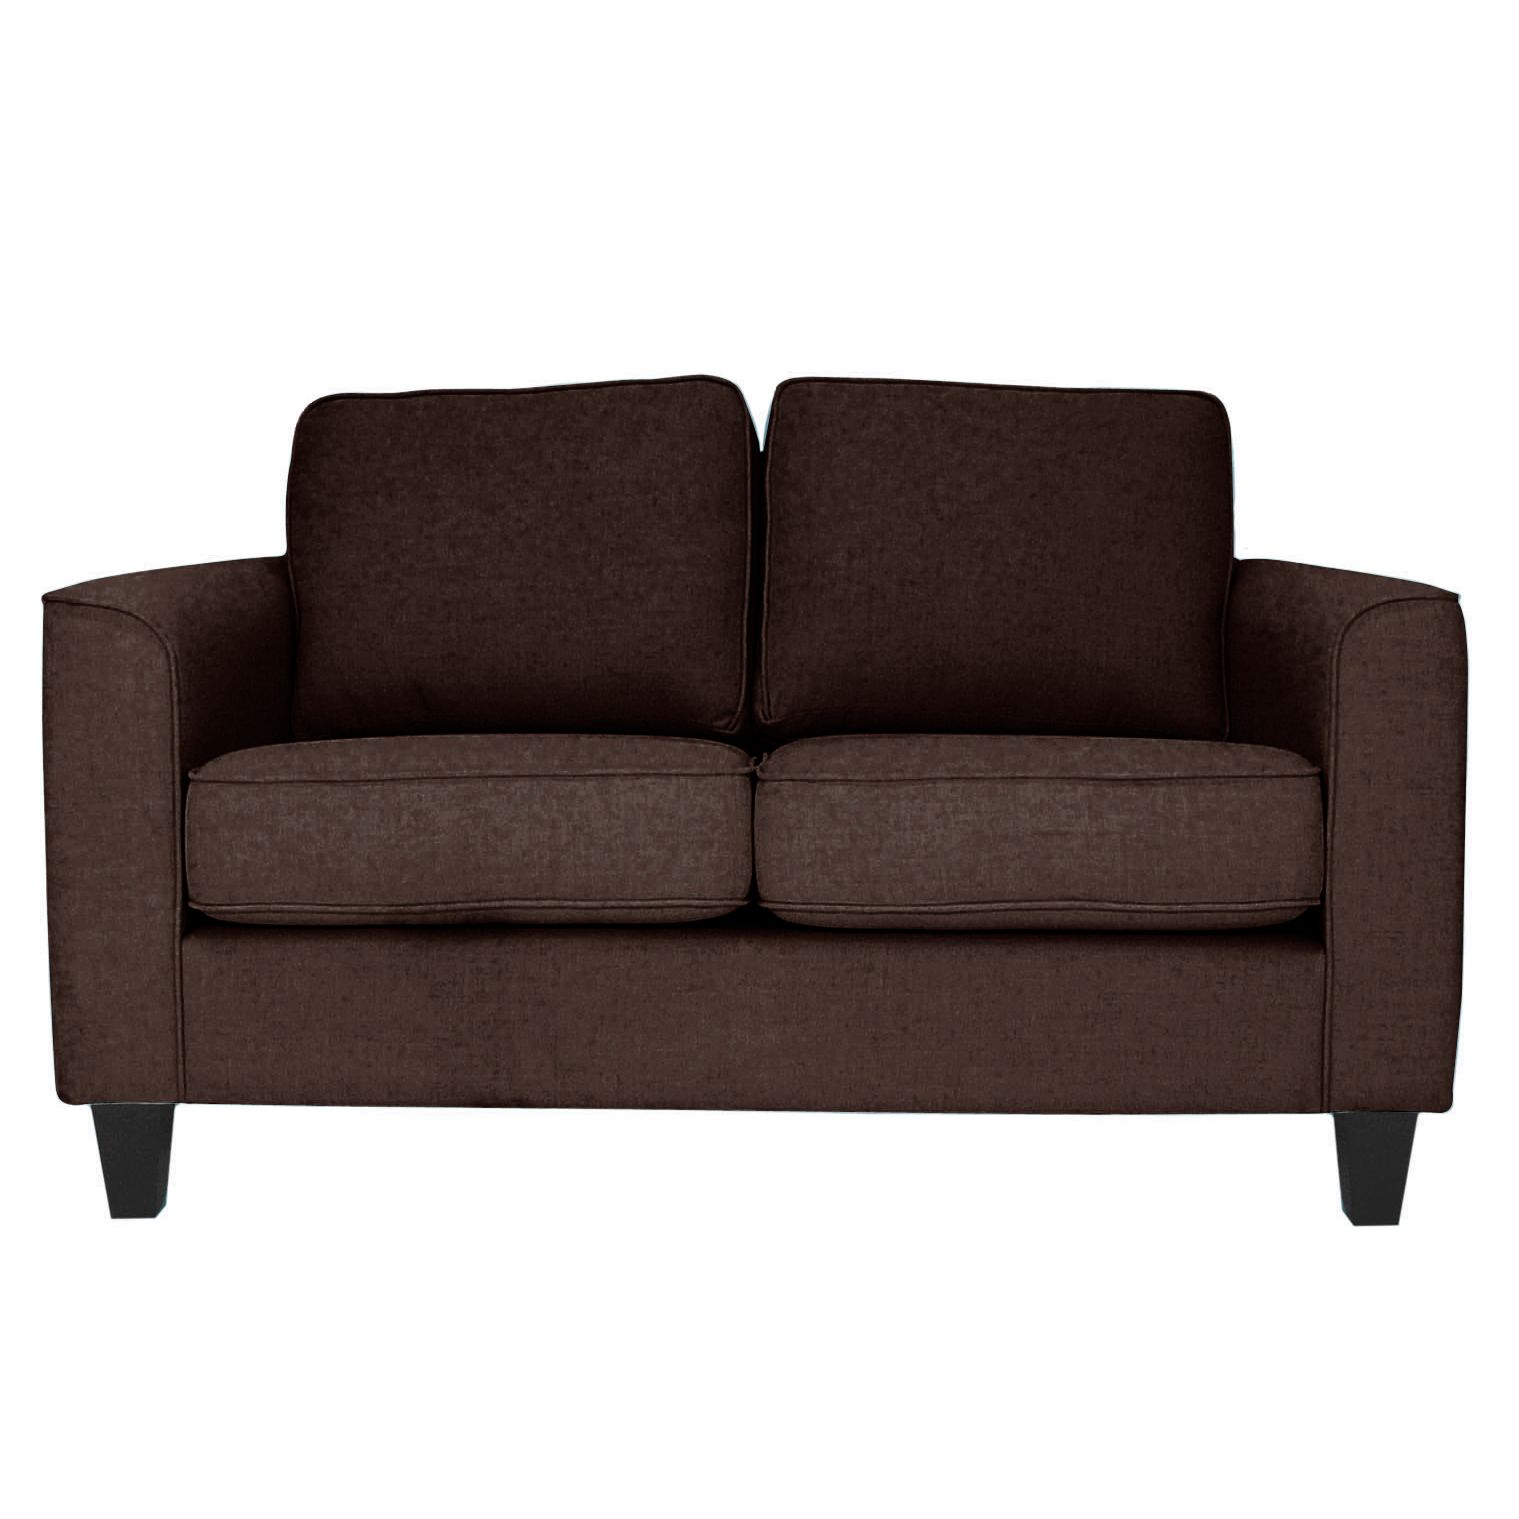 John Lewis Portia Small Sofa with Dark Legs 308321